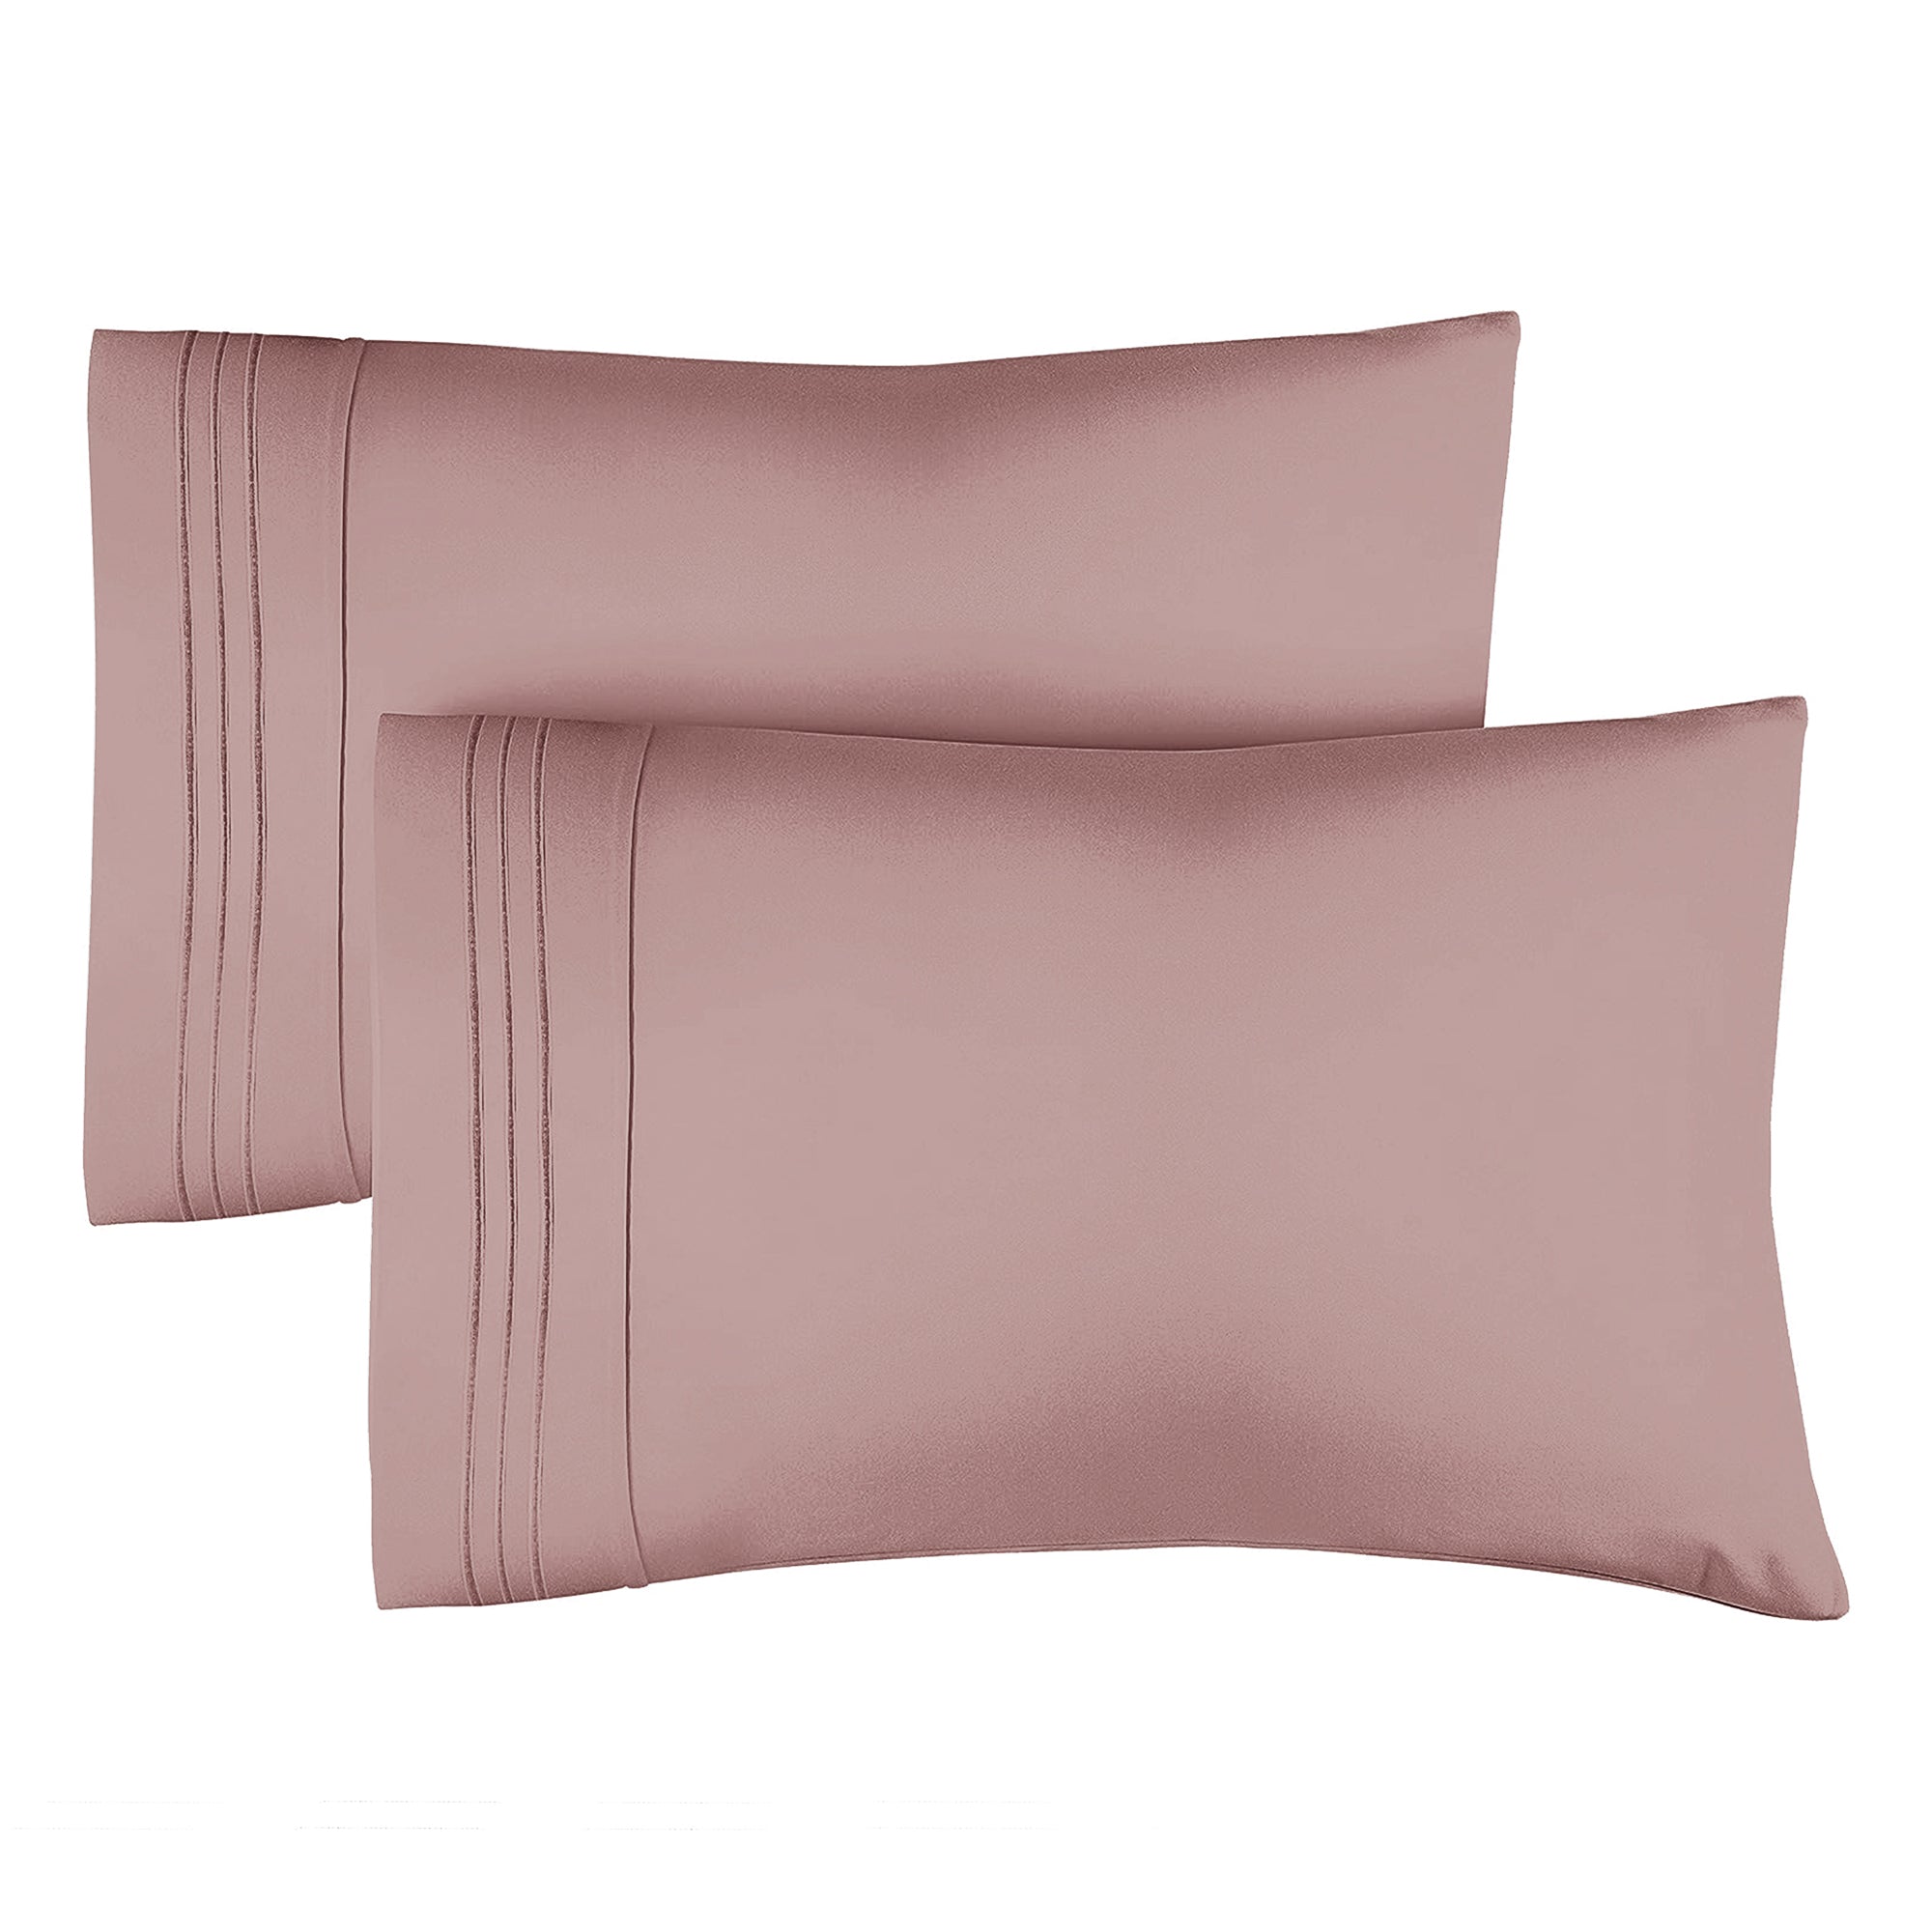 2 Pillowcase Set - Mauve